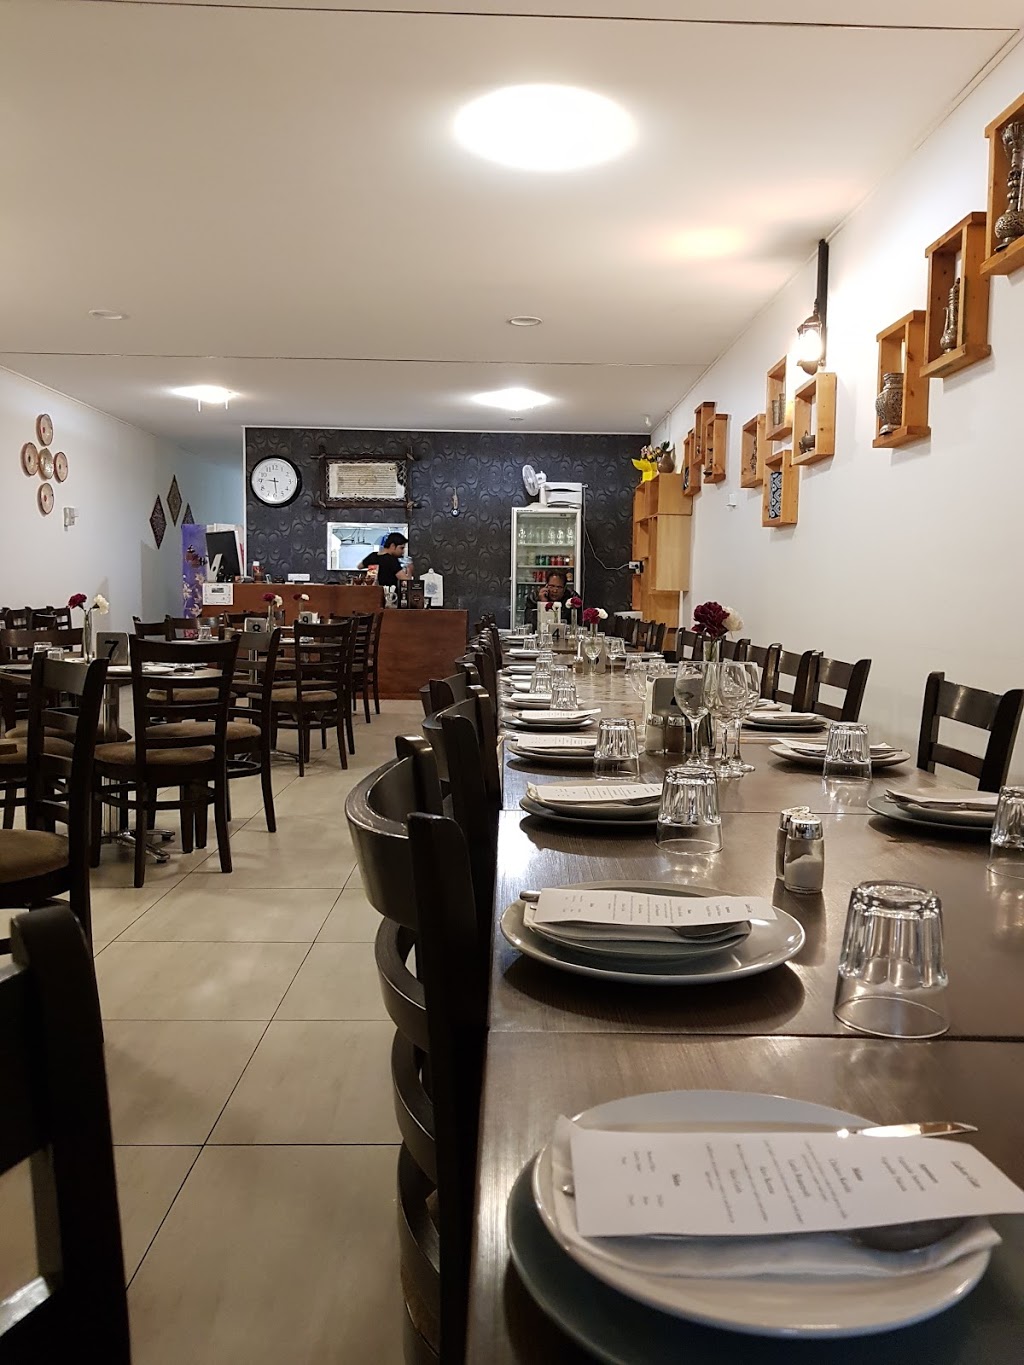 Lahori Gate Restaurant | restaurant | 1/4 Weetangera Pl, Weetangera ACT 2614, Australia | 0262783987 OR +61 2 6278 3987